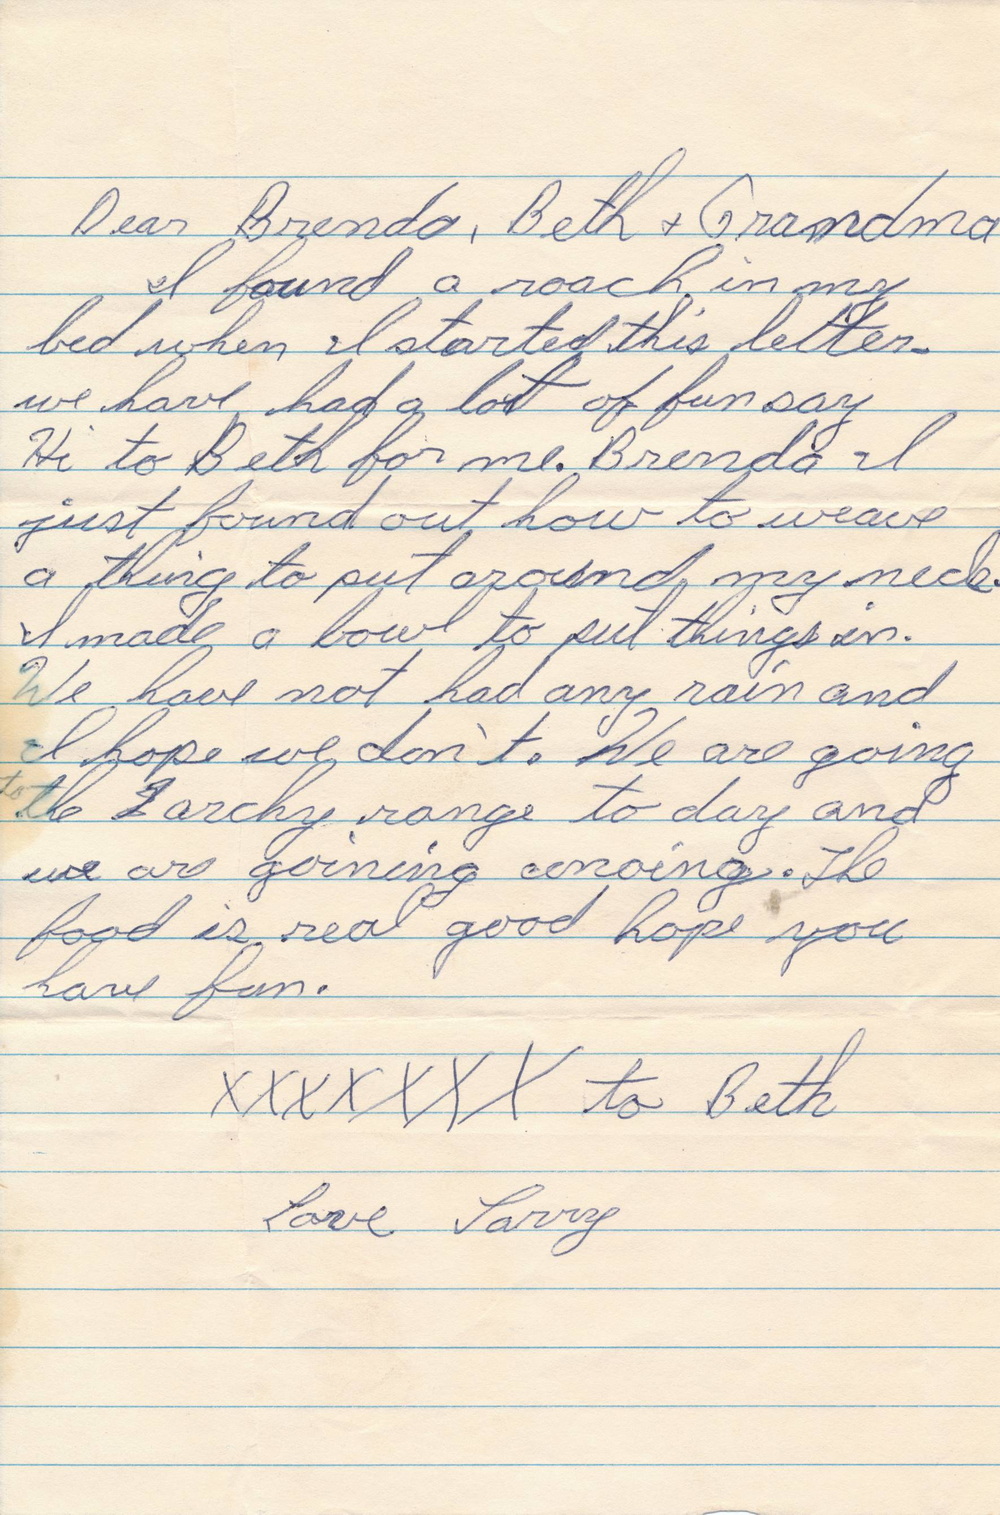 Larry's Letter to Brenda, Beth and Grandma